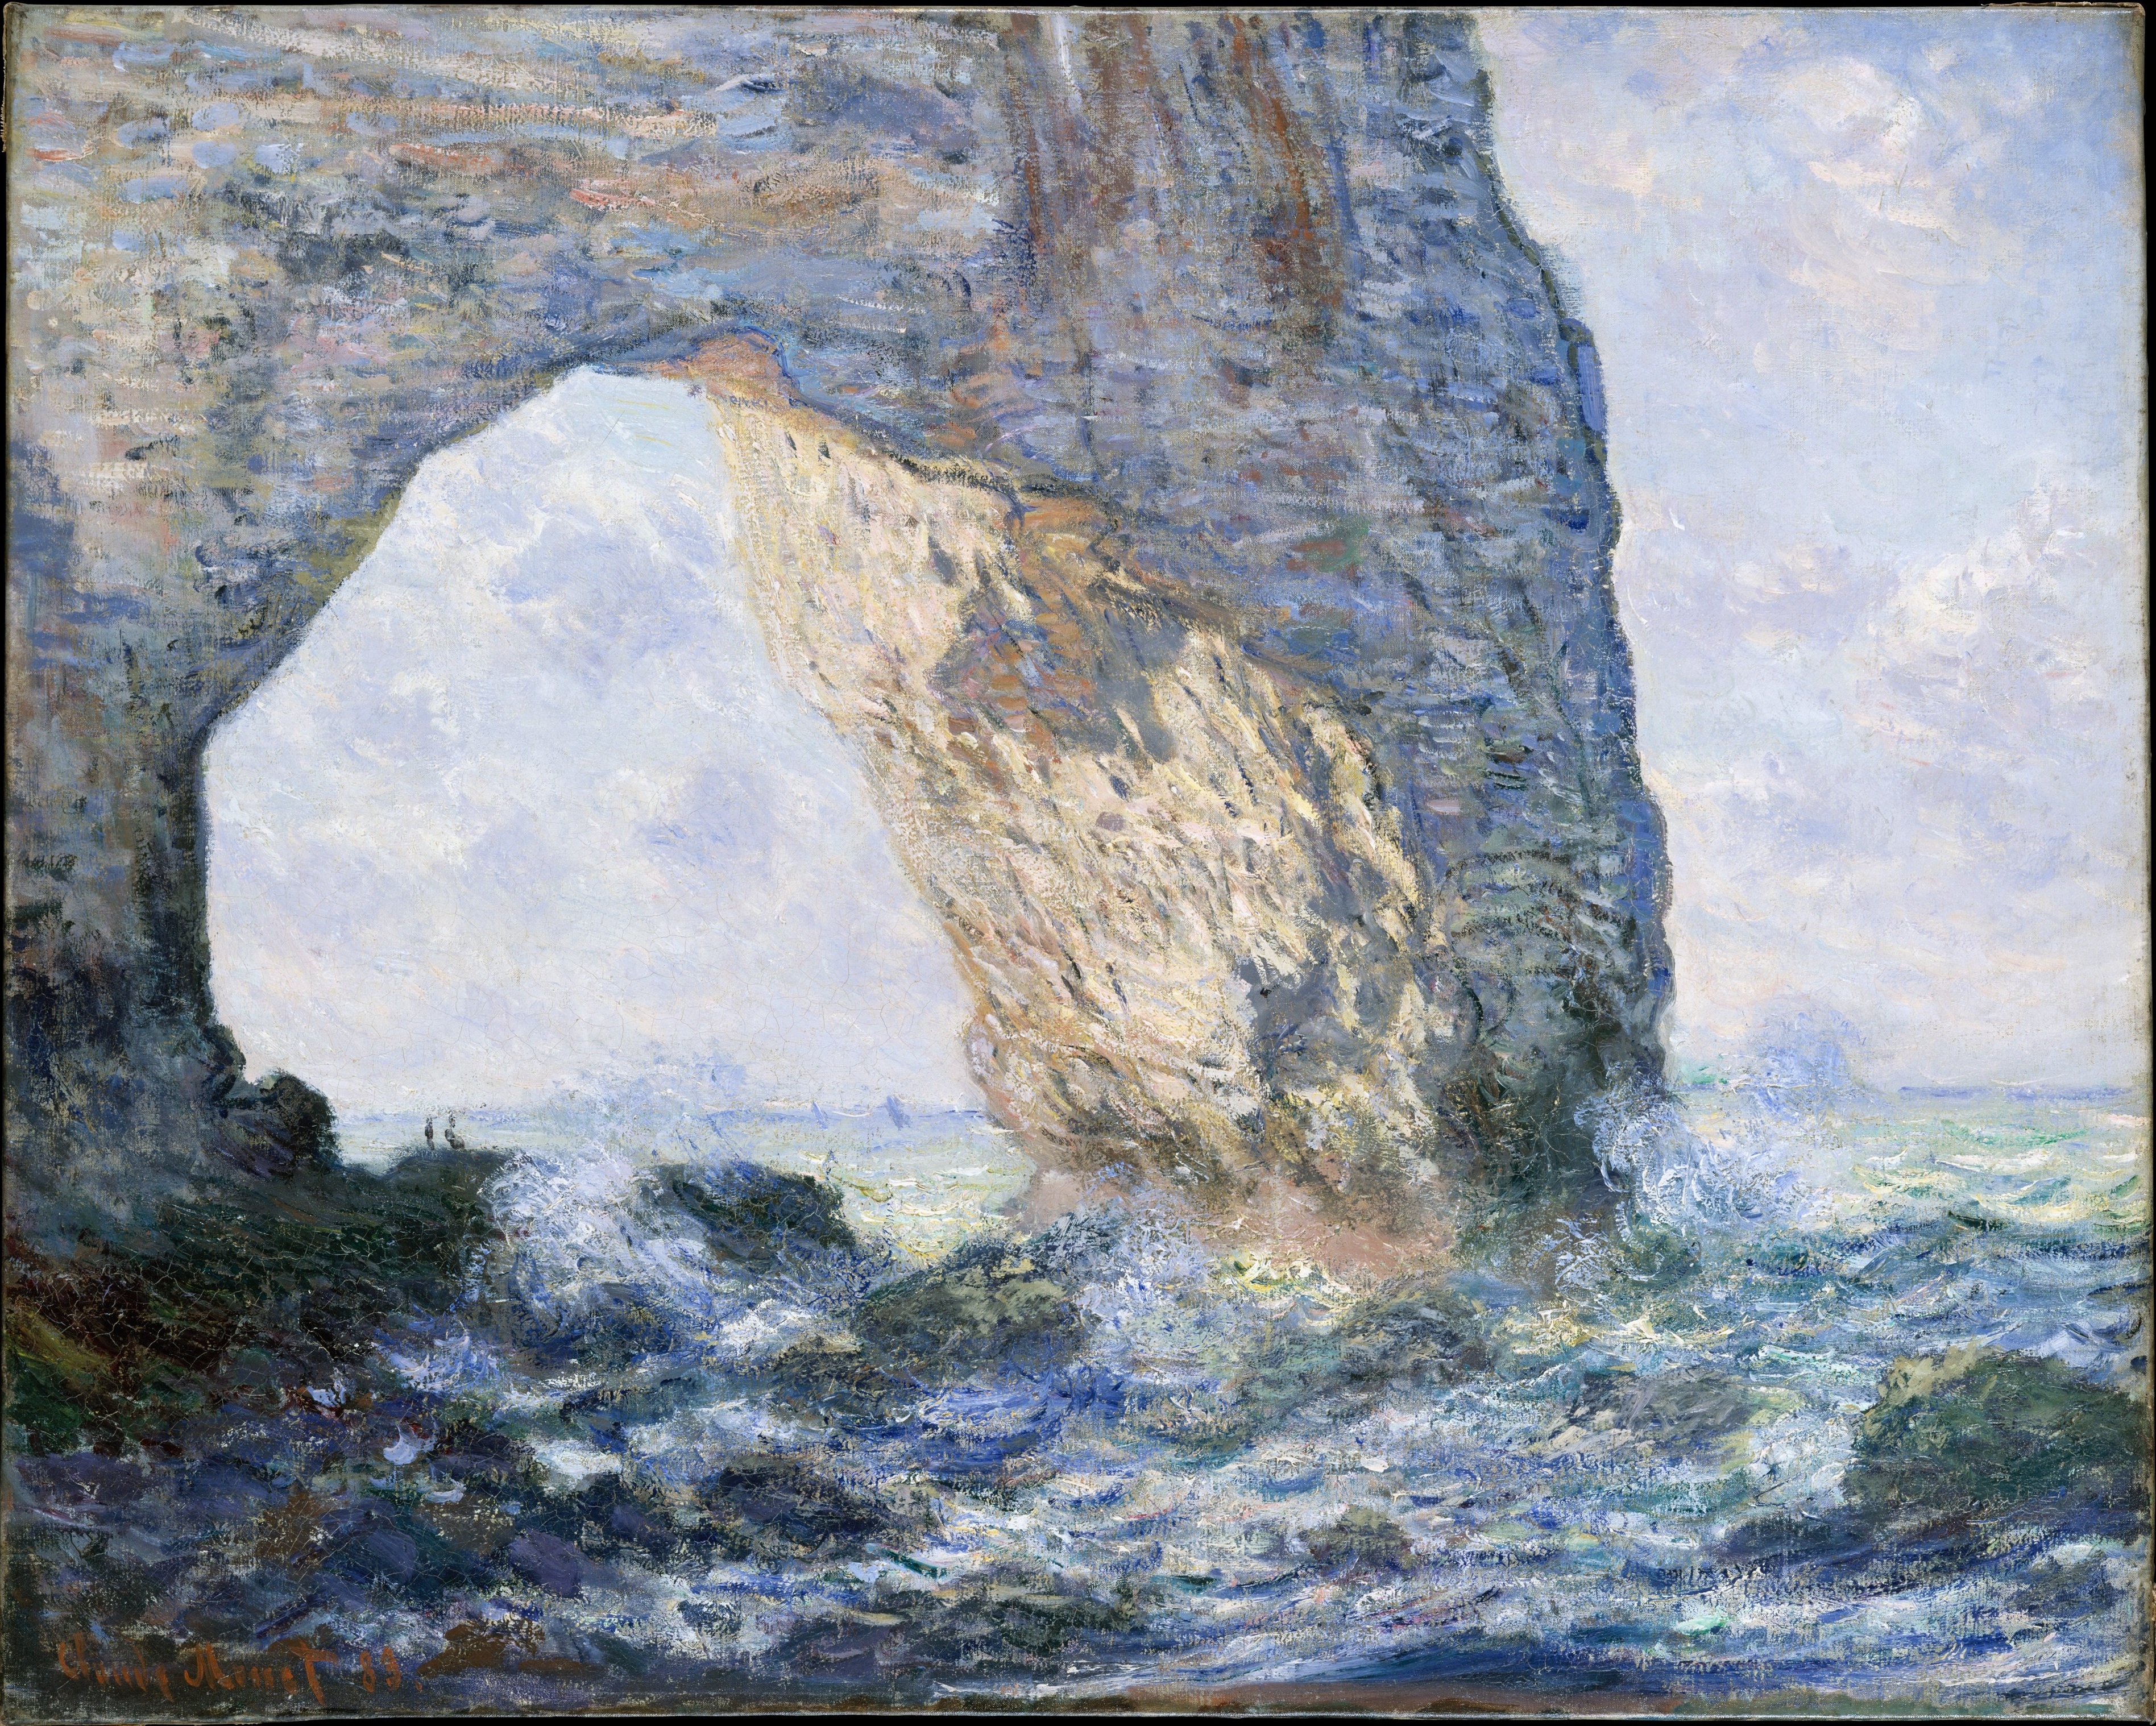 La Manneporte by Claude Monet - 1883 - 65.4 × 81.3 cm Metropolitan Museum of Art